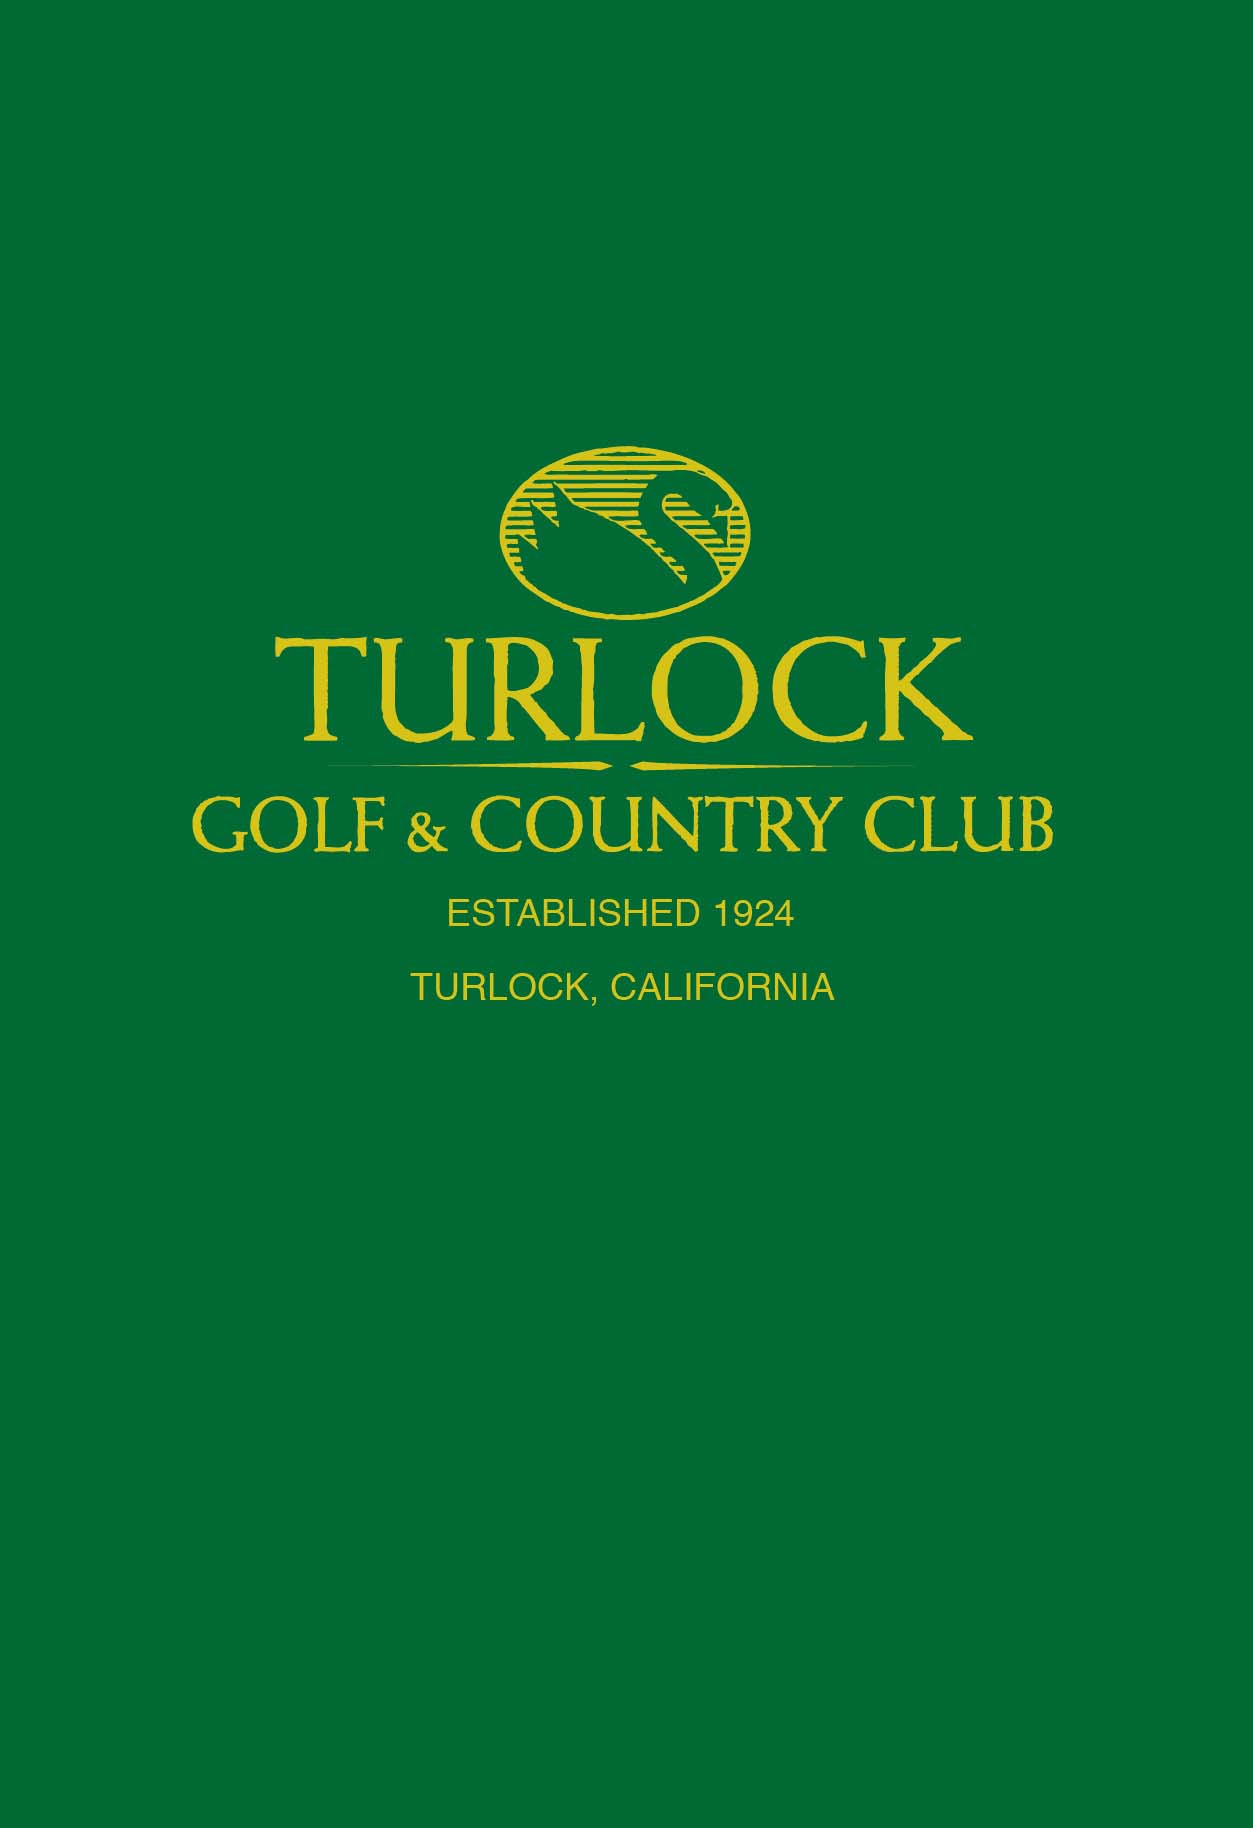 Turlock G & CC